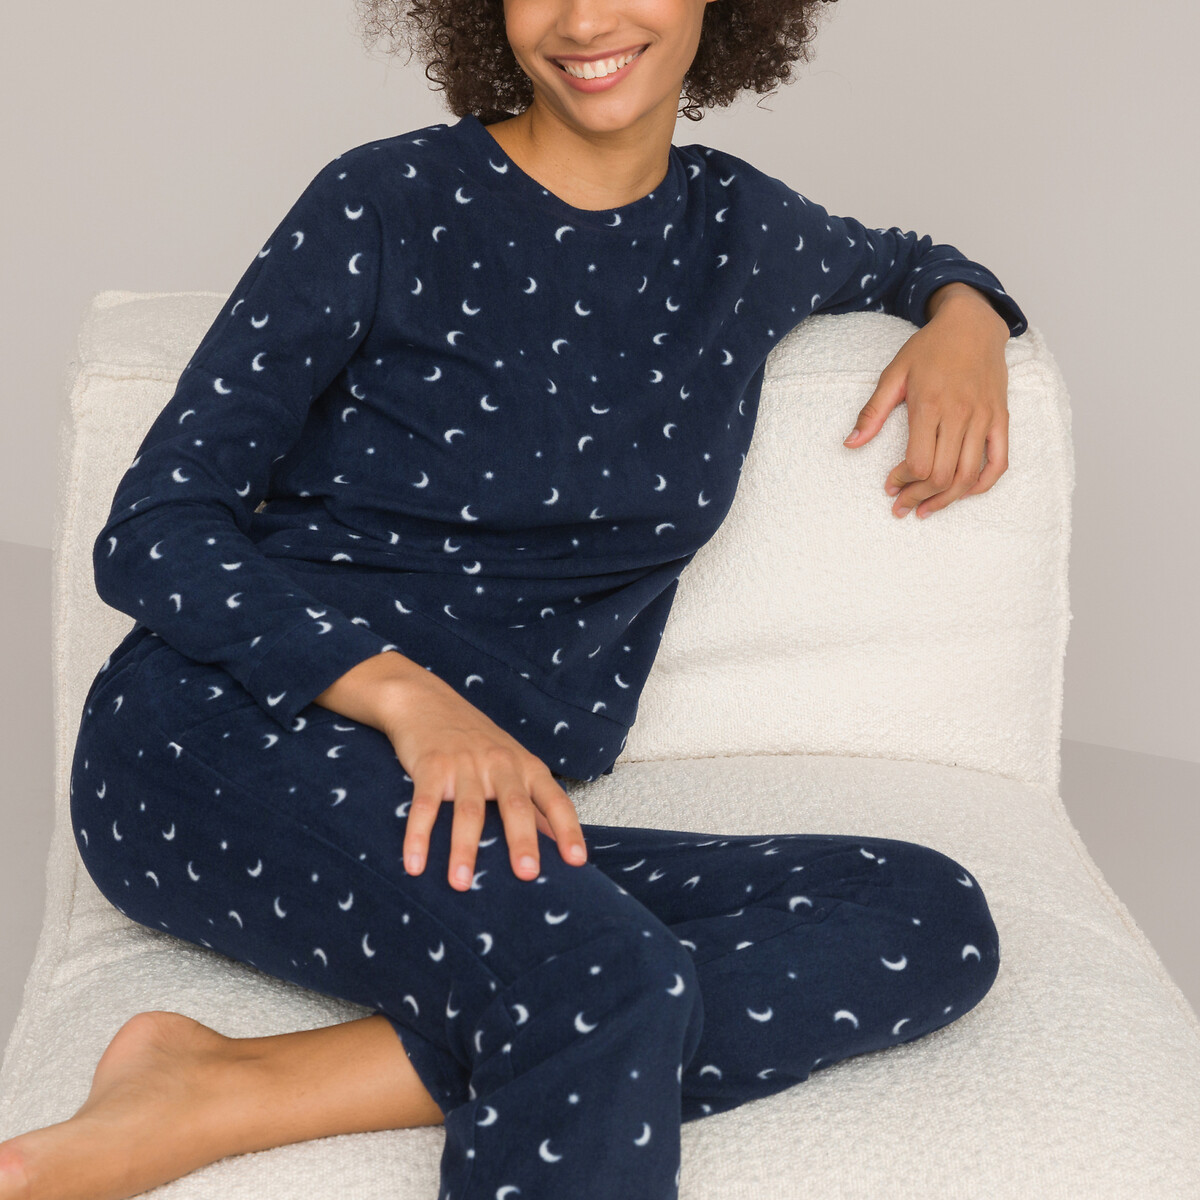 Micro Fleece Pyjamas in Star Print